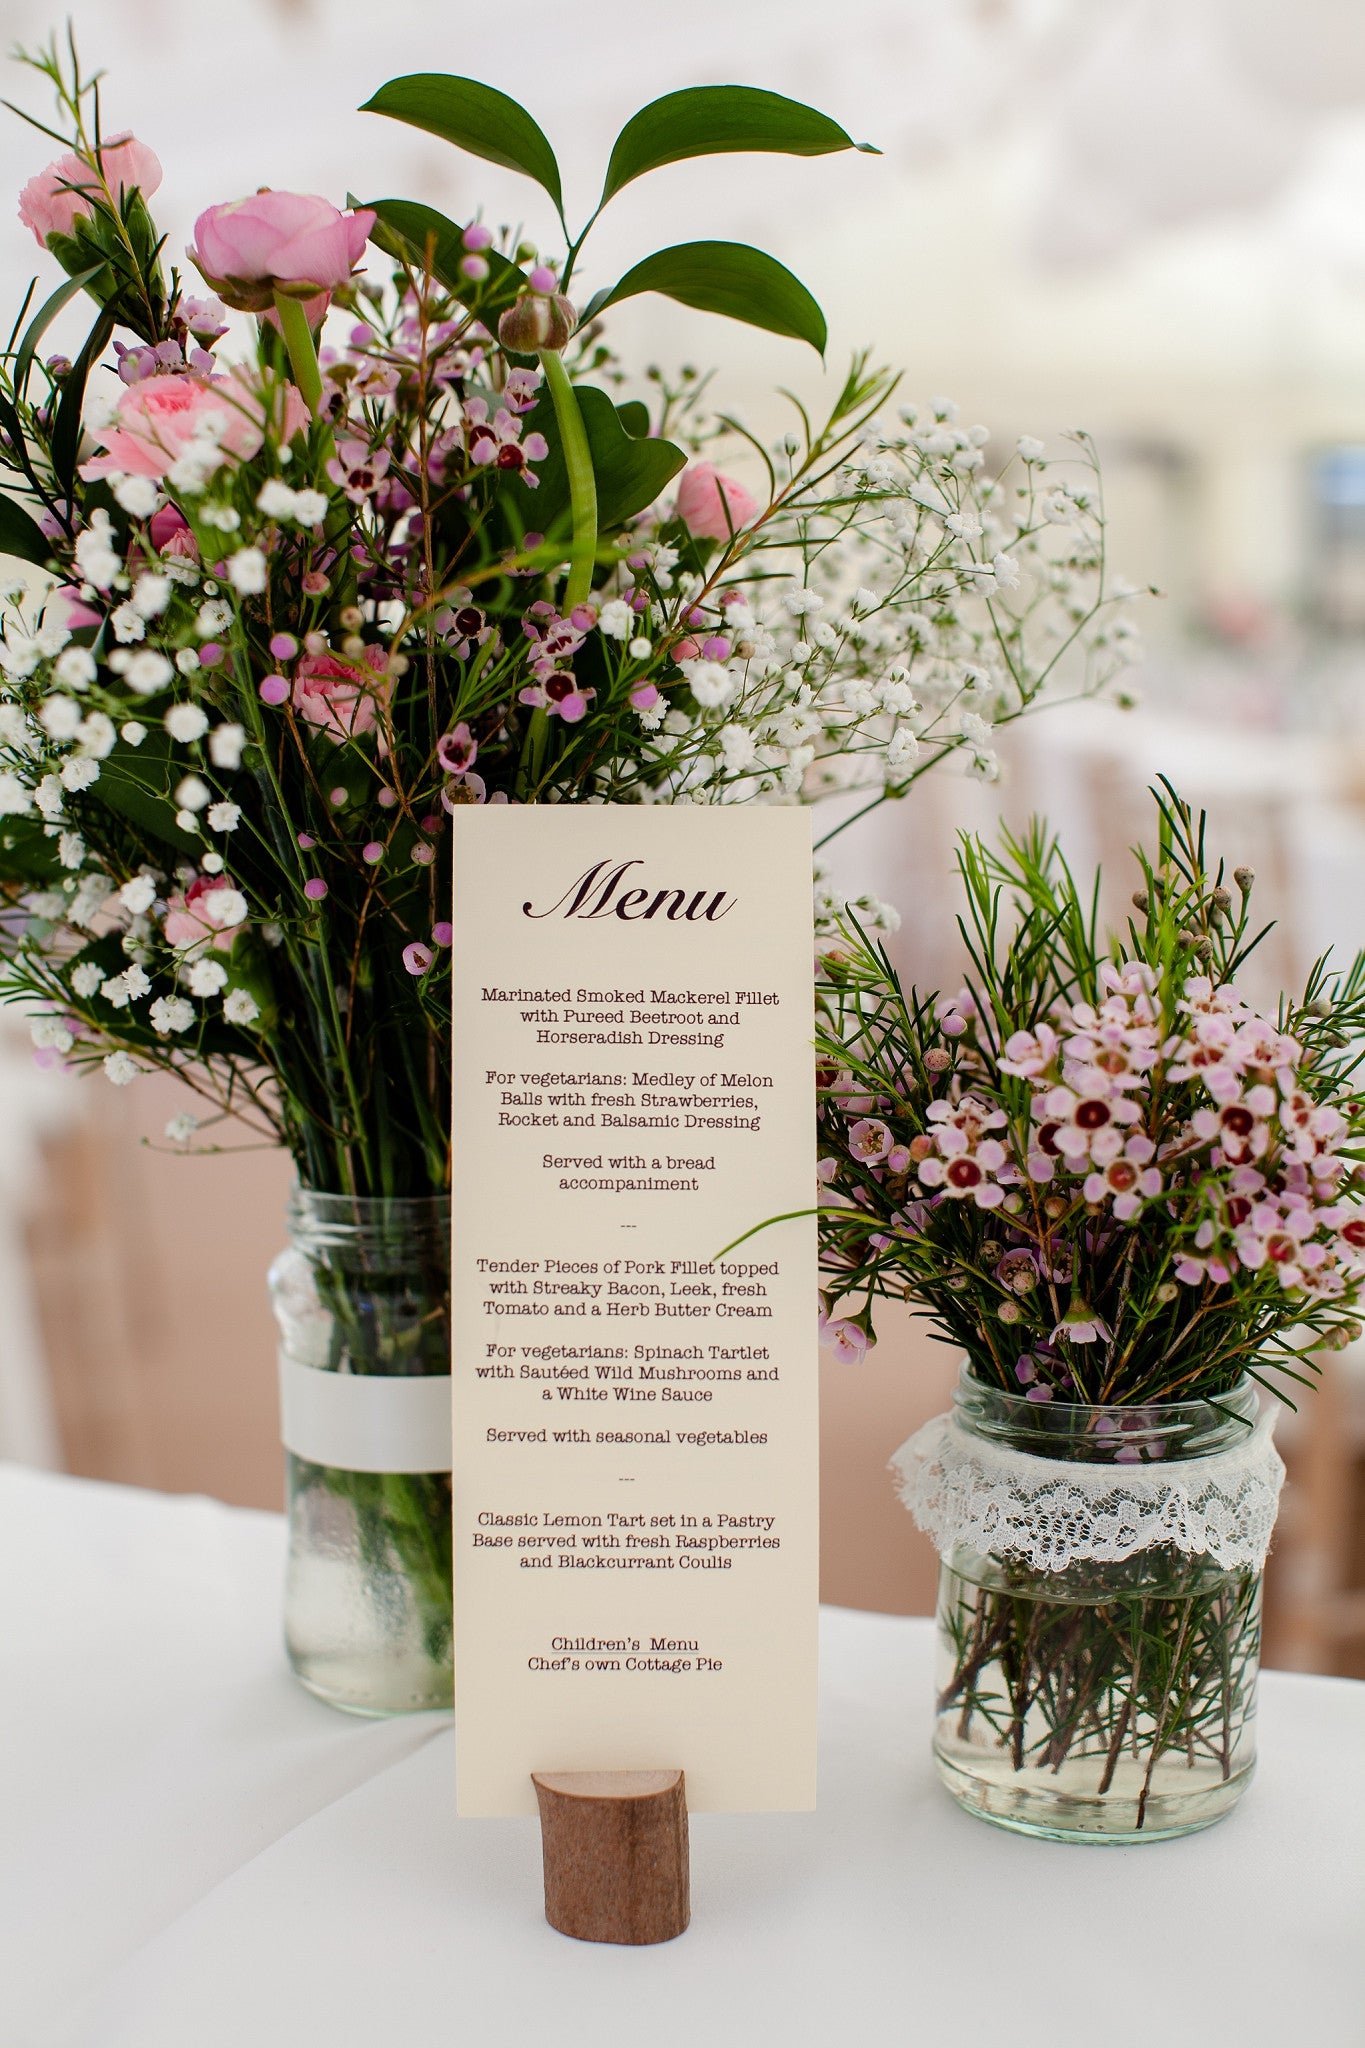 Wedding menu with floral table arrangements in jam jars.